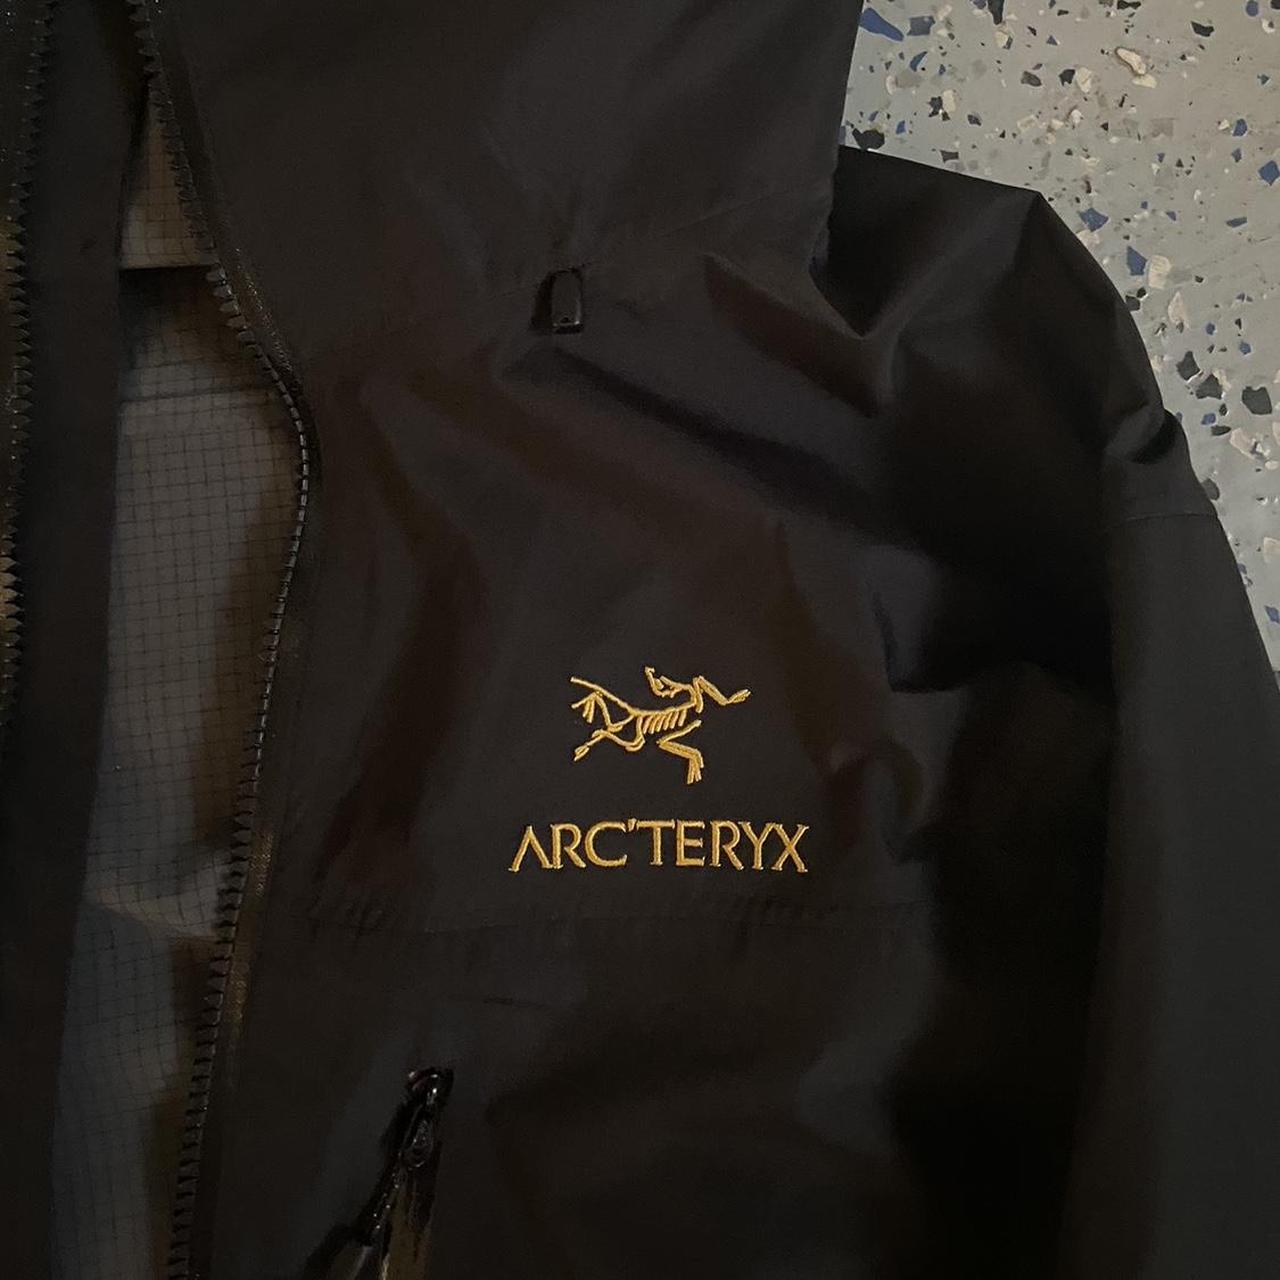 Arc'teryx Men's Black and Yellow Jacket | Depop